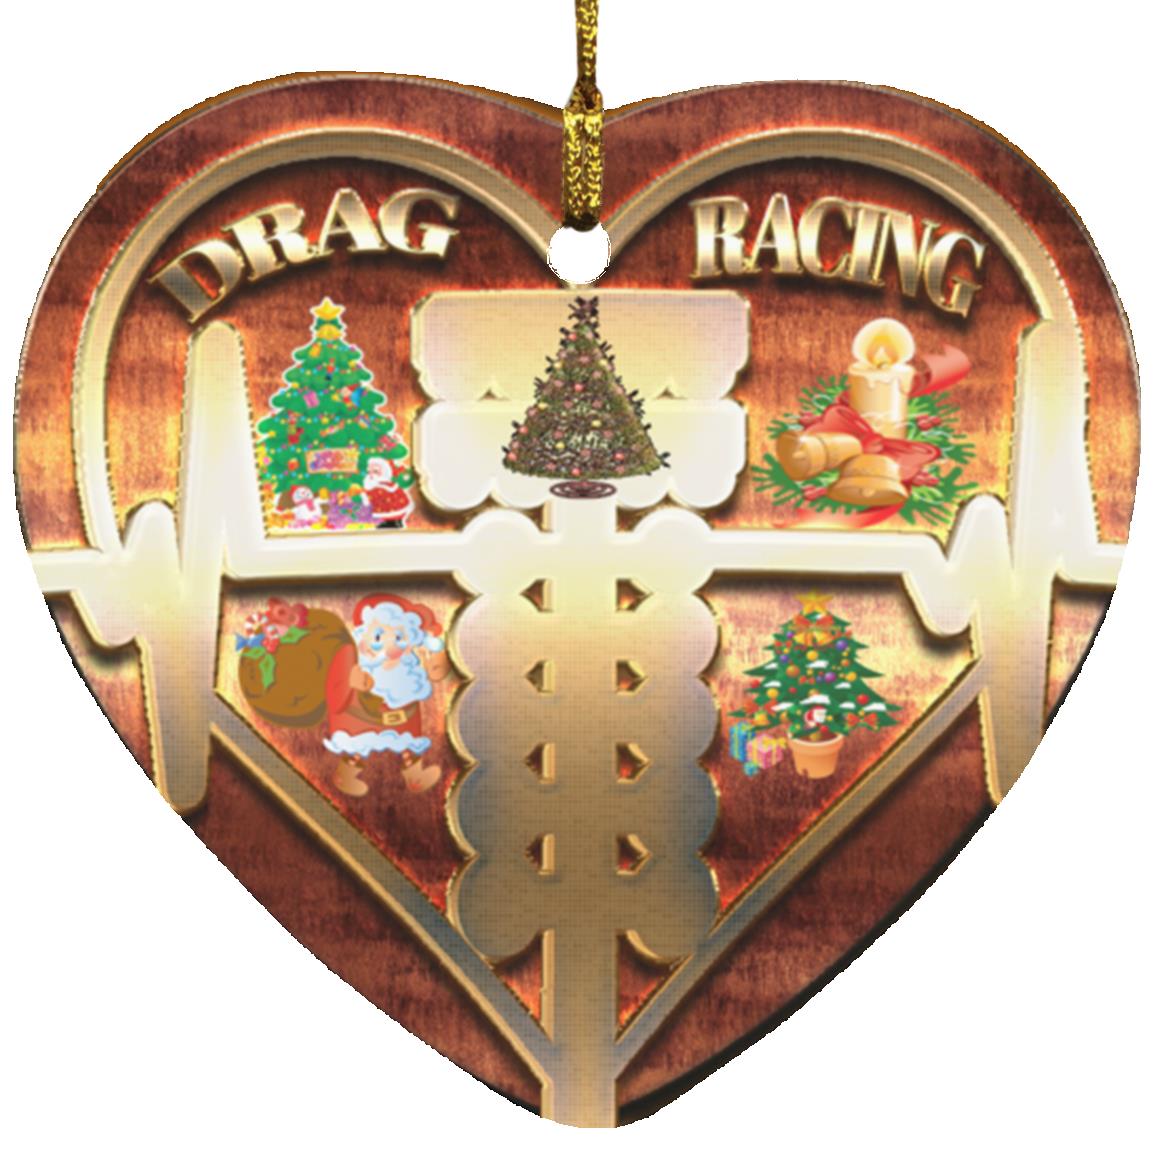 Drag Racing SUBORNH Heart Ornament V2